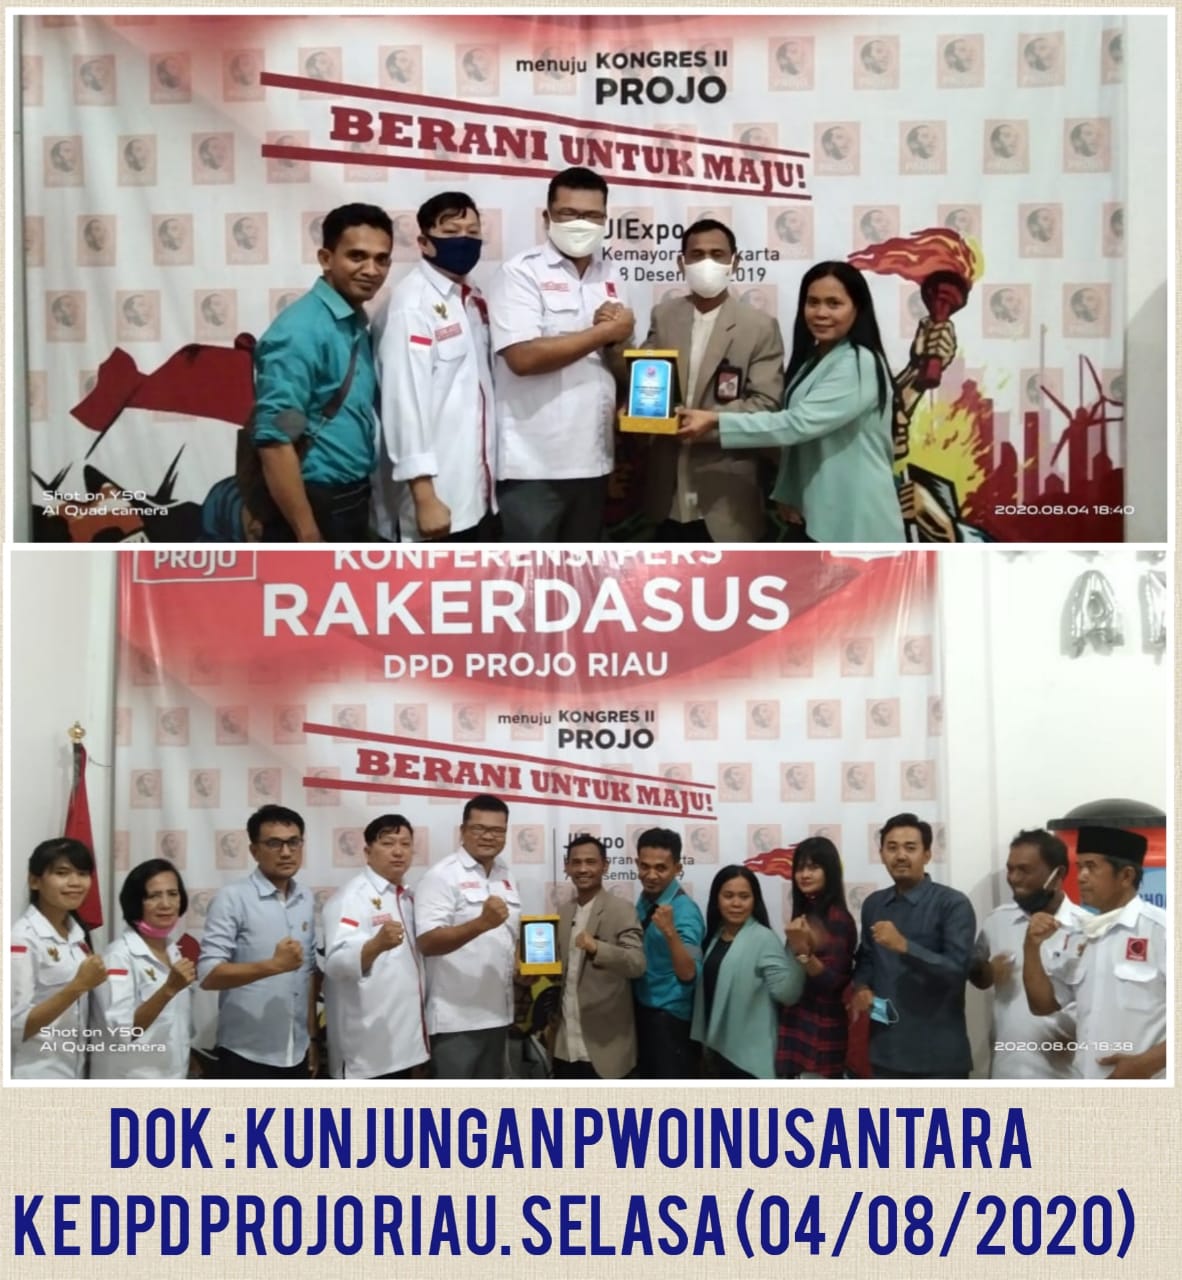 Kunjungan Balasan PWOINusantara ke Kantor Sekretariat DPD PROJO Riau